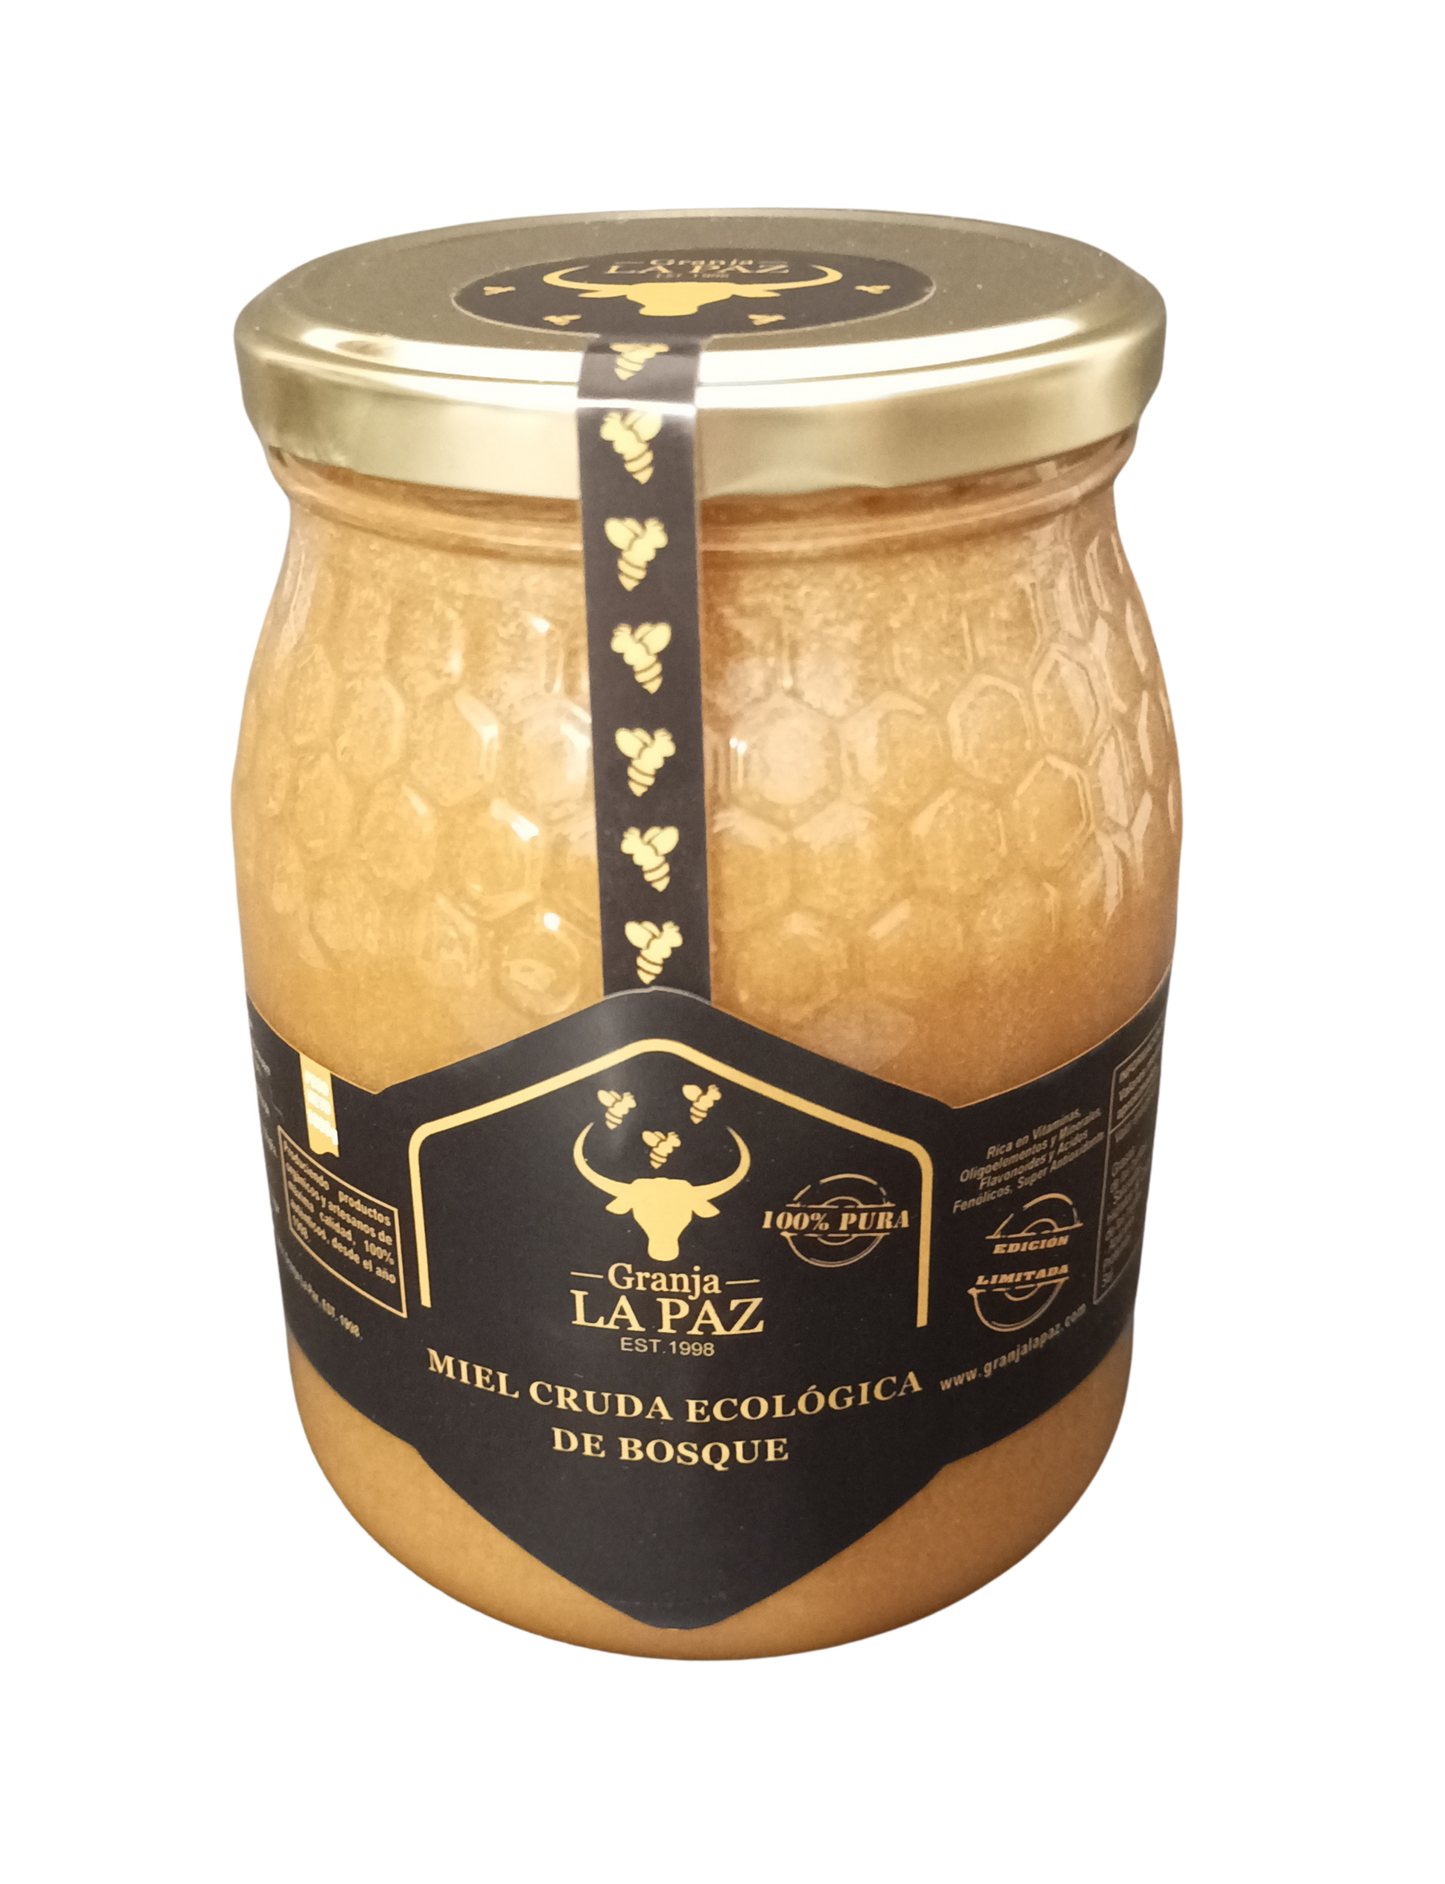 miel cruda organica sin filtrar de bosque mediterraneo ecológica pura